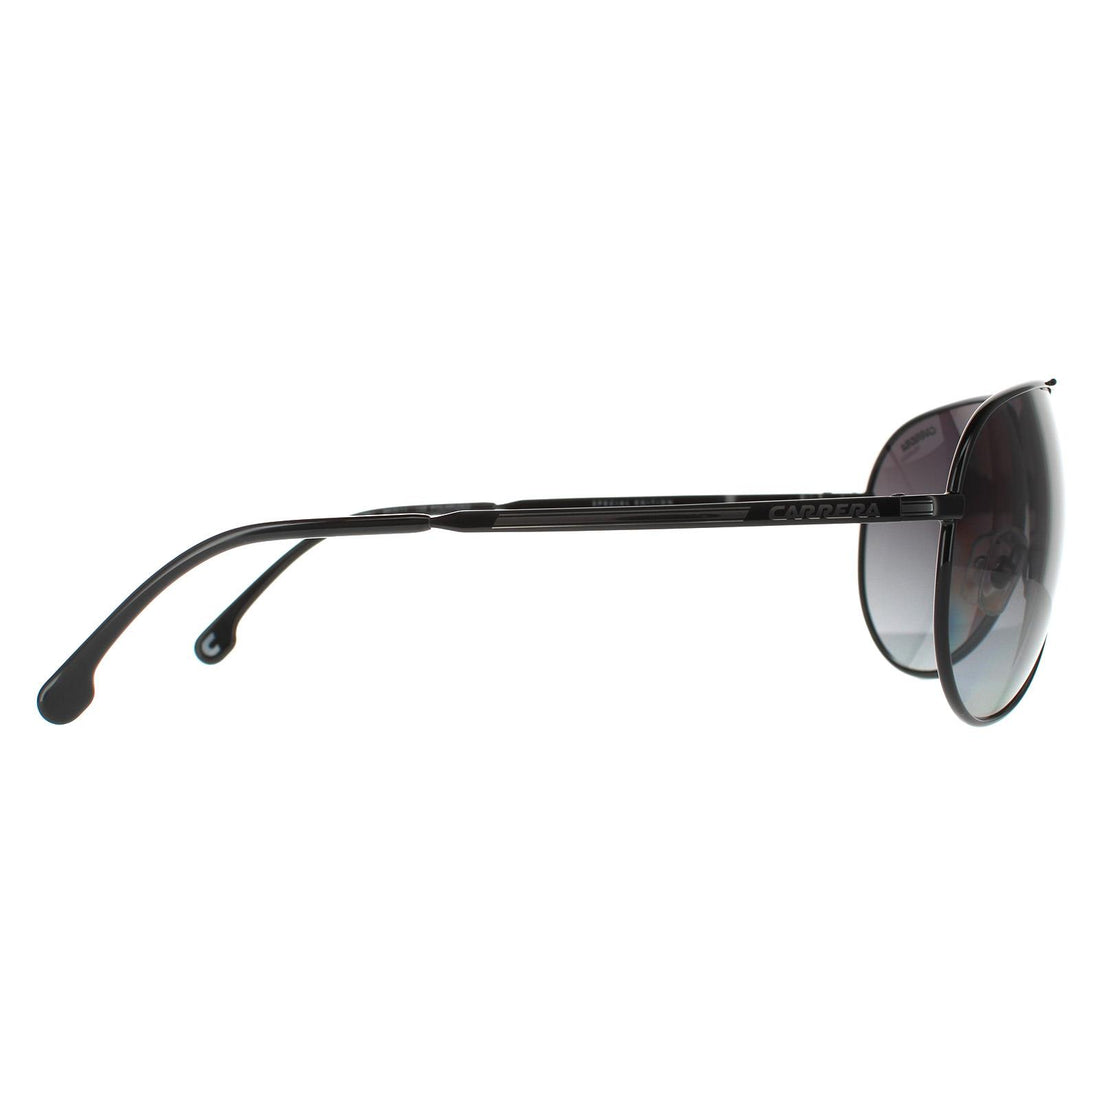 Carrera Sunglasses Gipsy65 807 WJ Black Grey Gradient